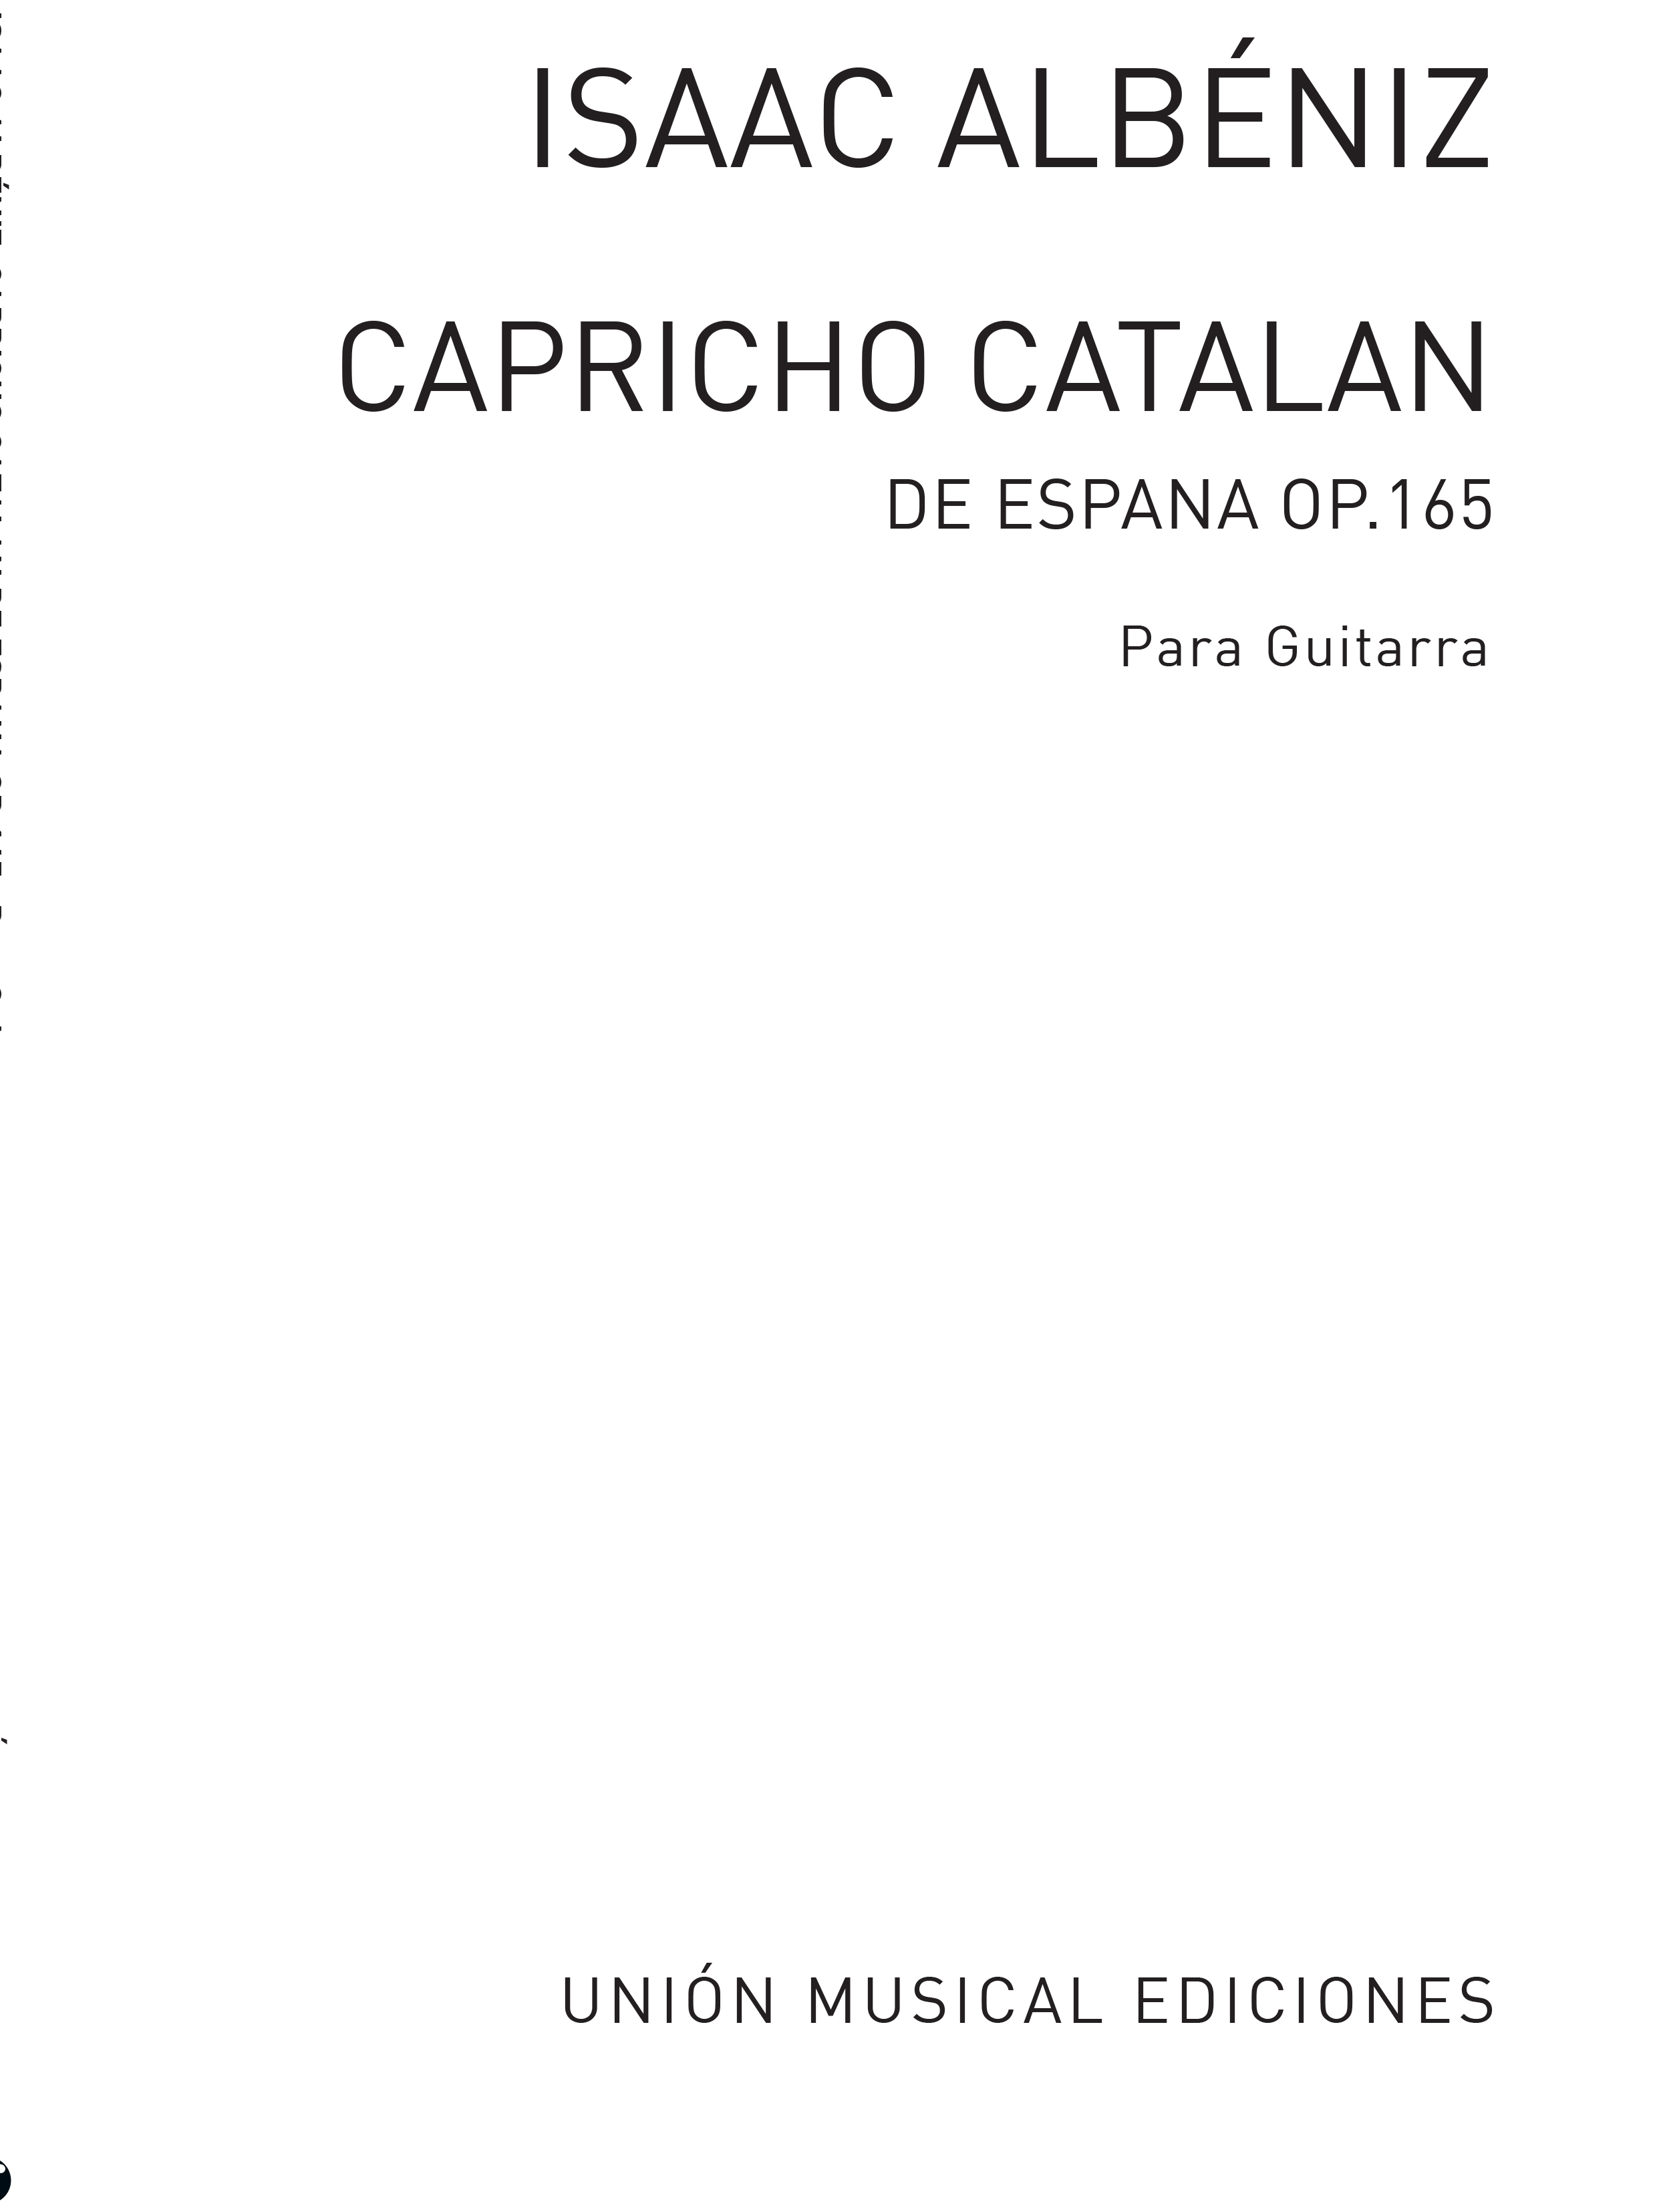 Isaac Albniz: Capricho Catalan (balaguer) Guitar: Guitar: Instrumental Album